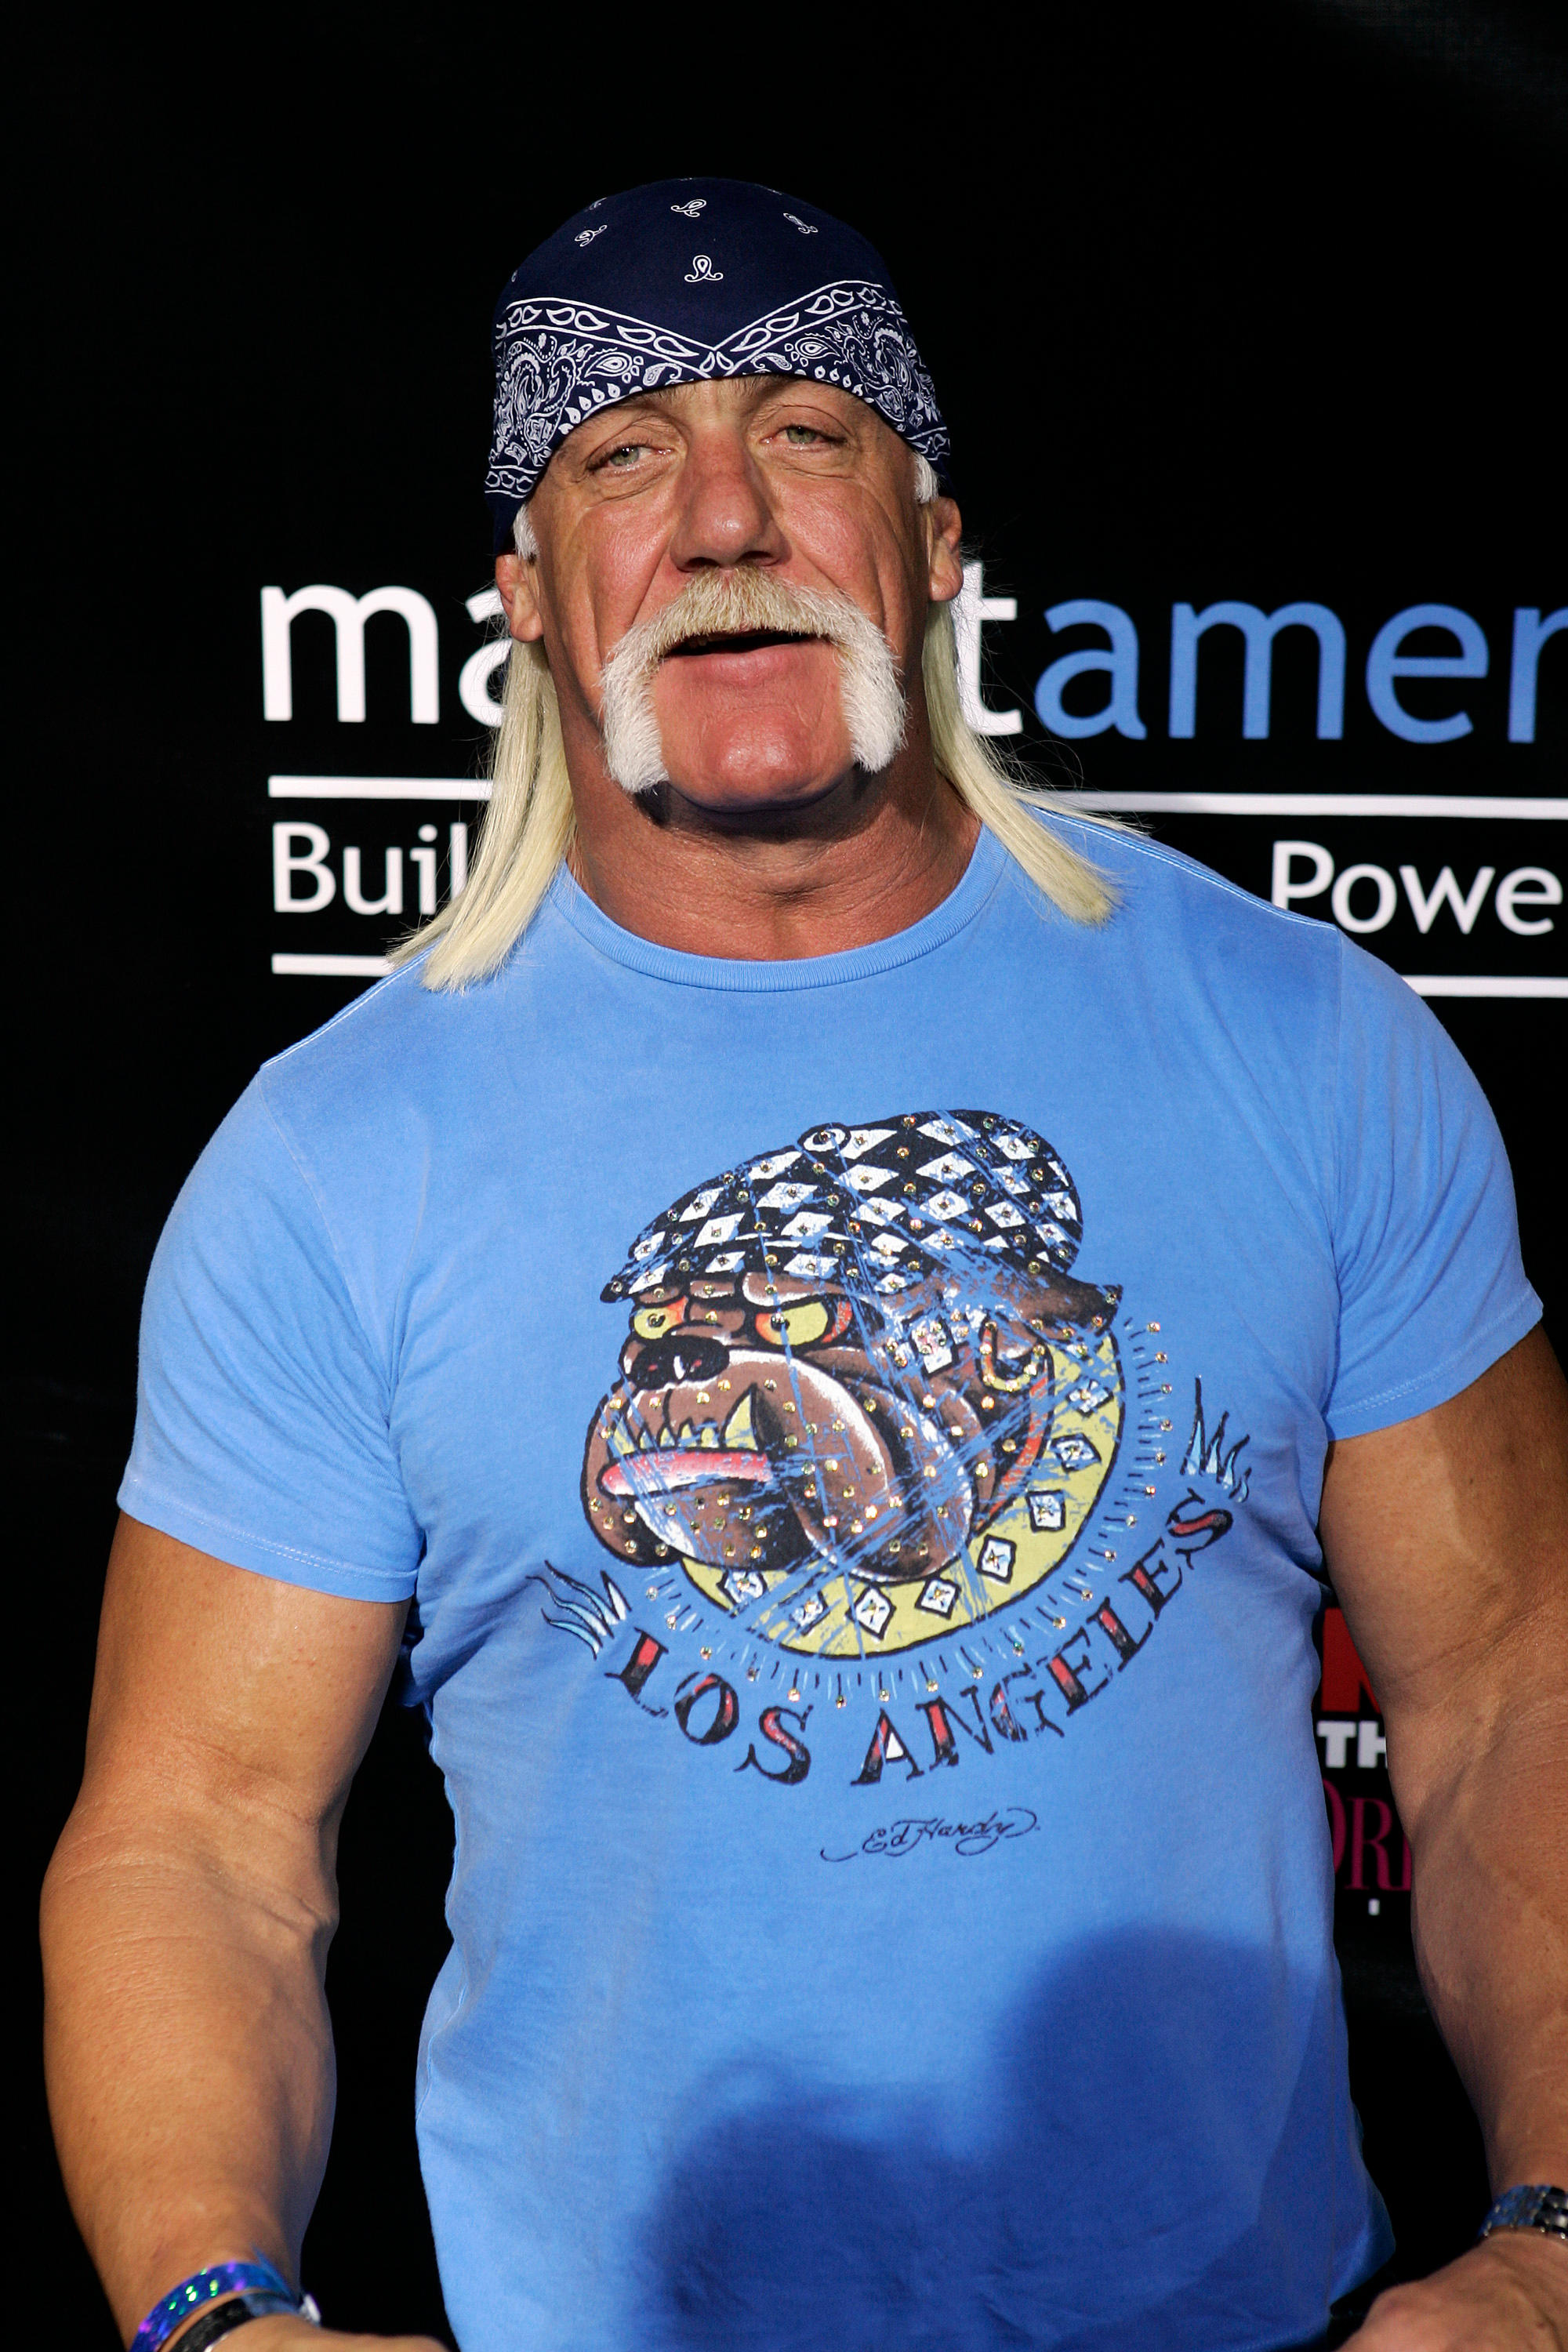 Hulk Hogan with his famous horseshoe moustache